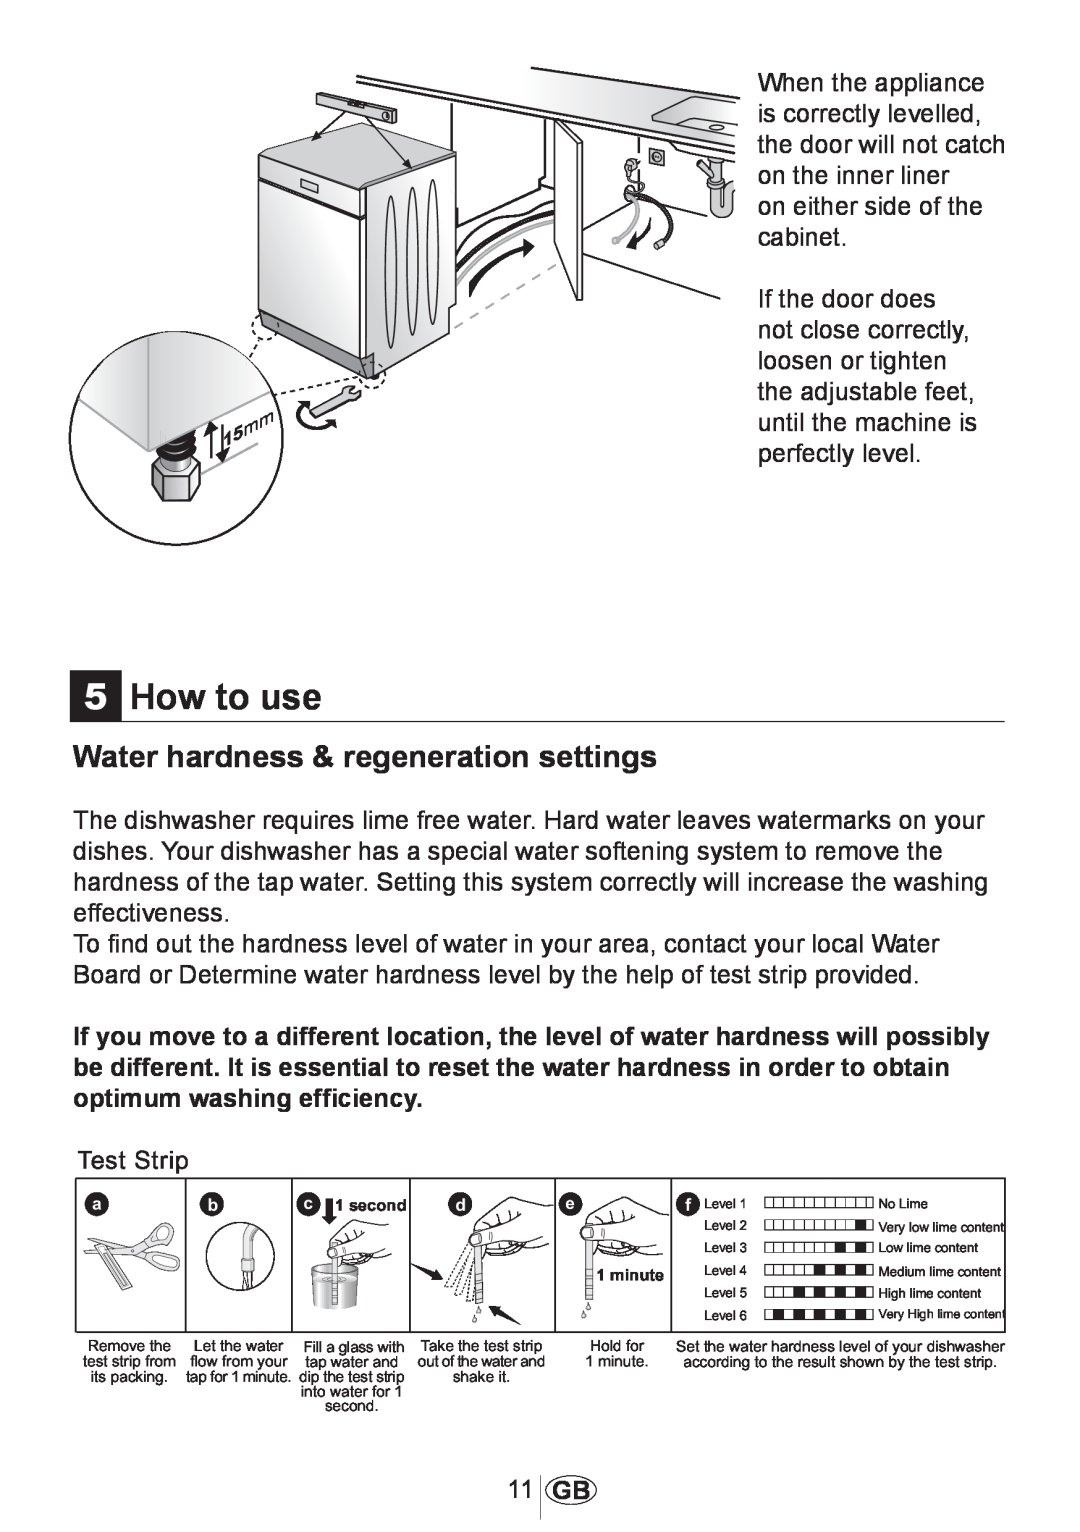 Beko DWD5414 manual 5How to use, Water hardness & regeneration settings 